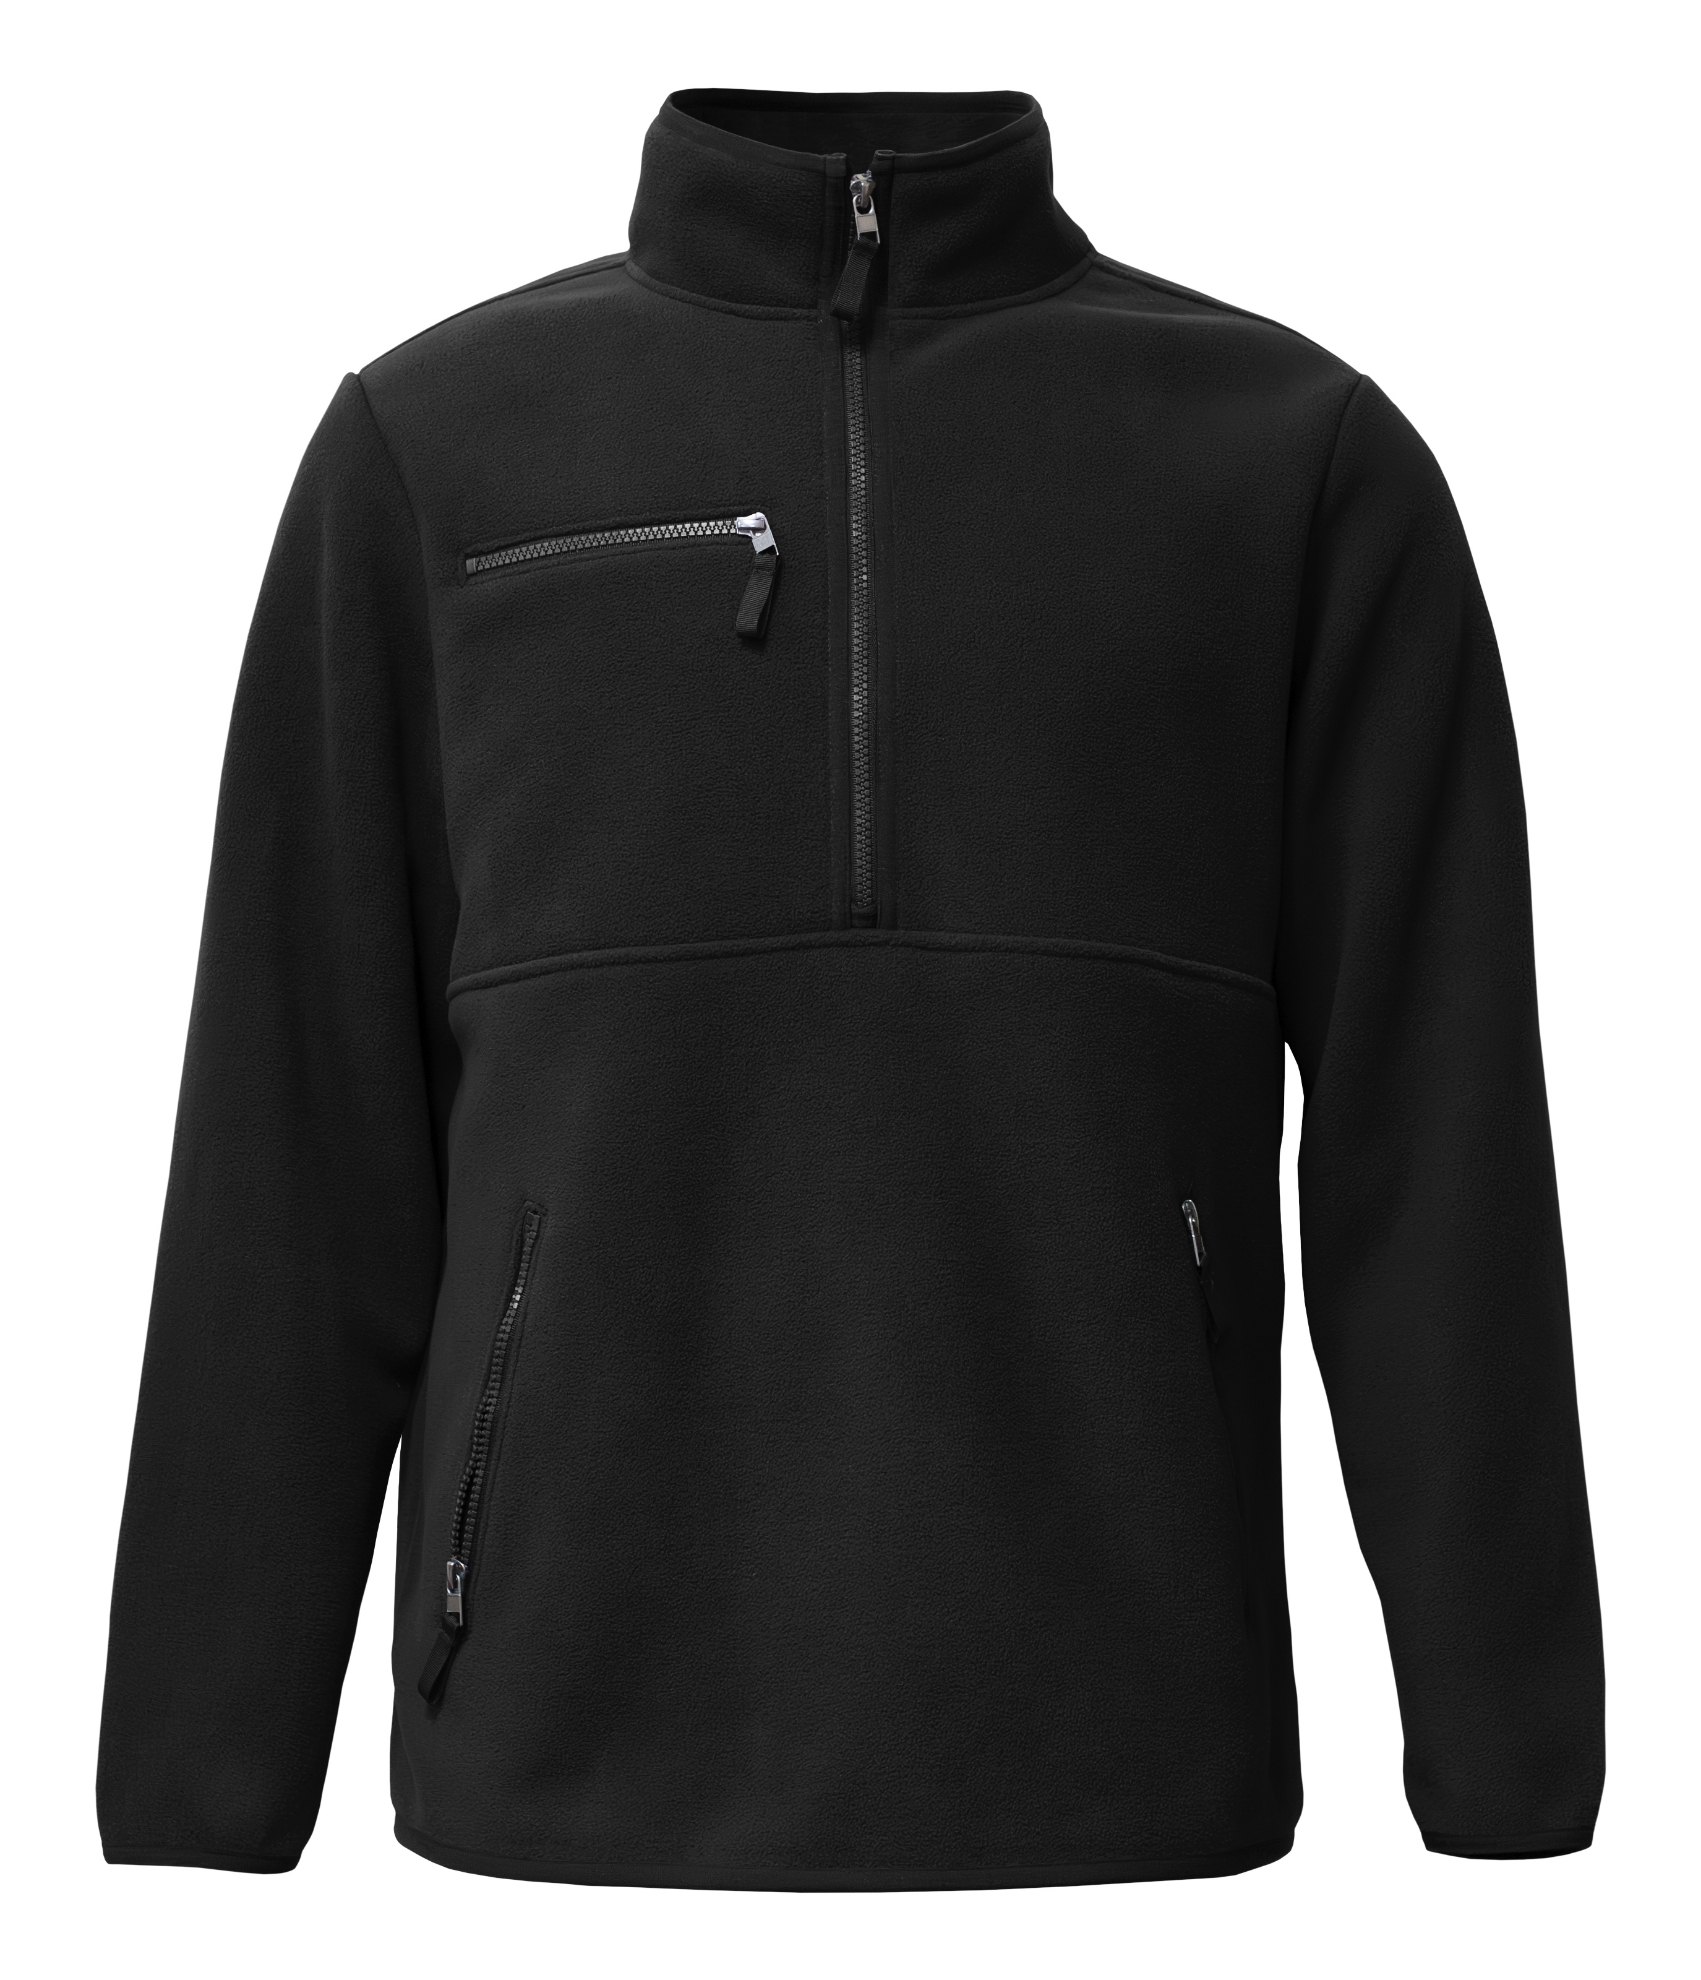 BAW Athletic Wear BQ25 - Adult Bonded Fleece 1/2 Zip